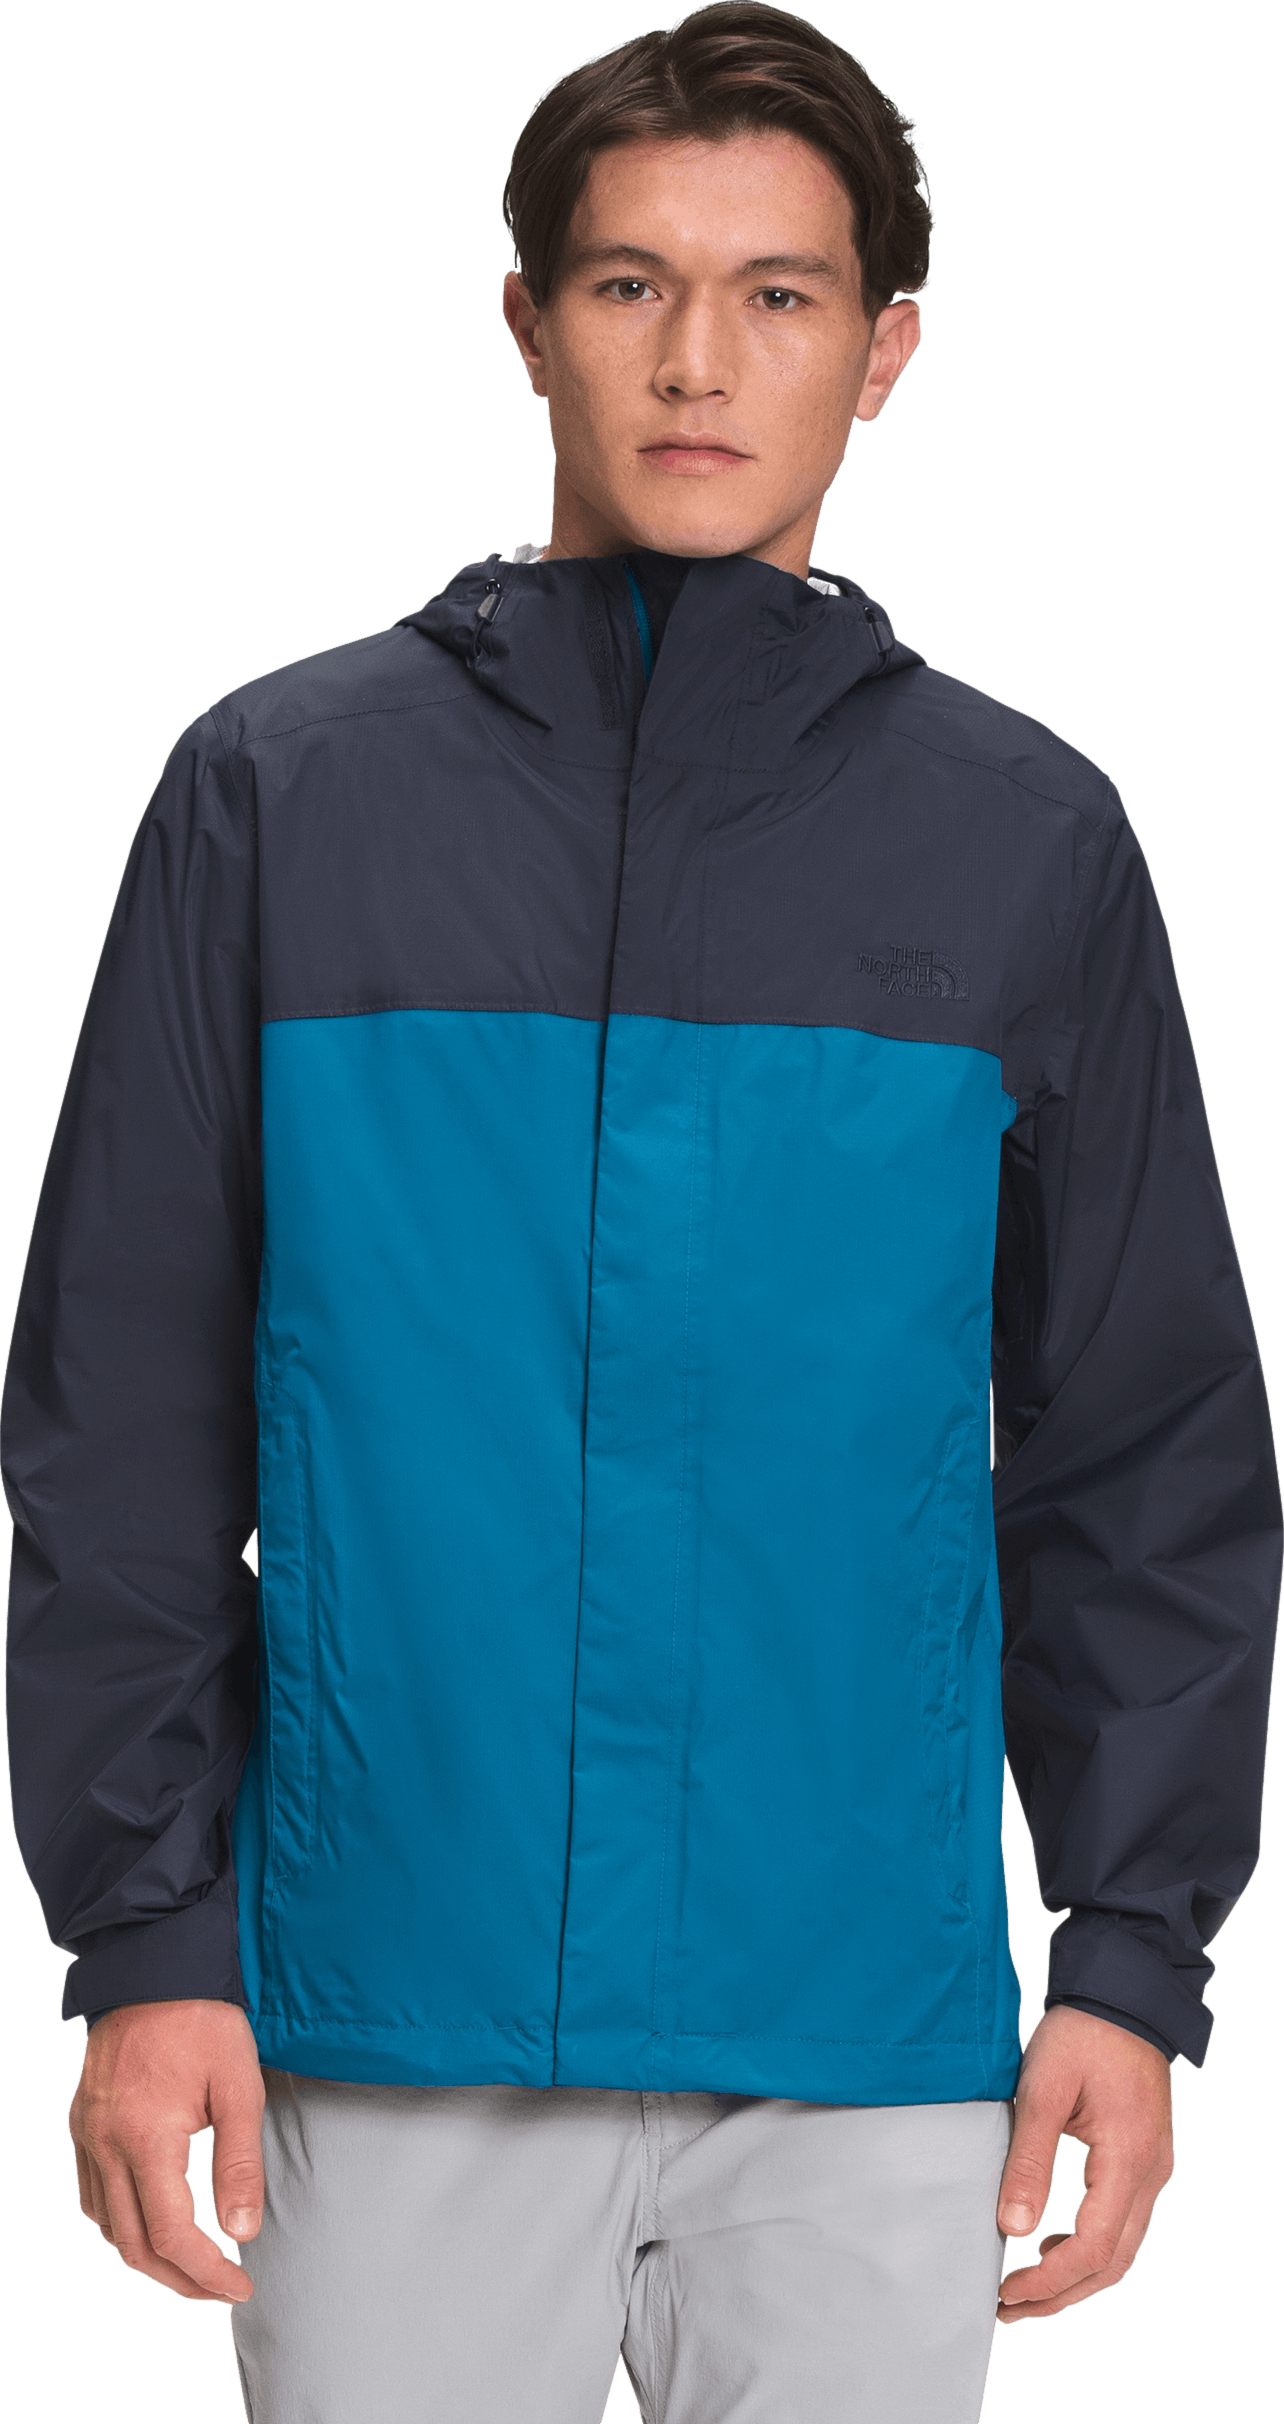 The North Face Men's Venture 2 Jacket